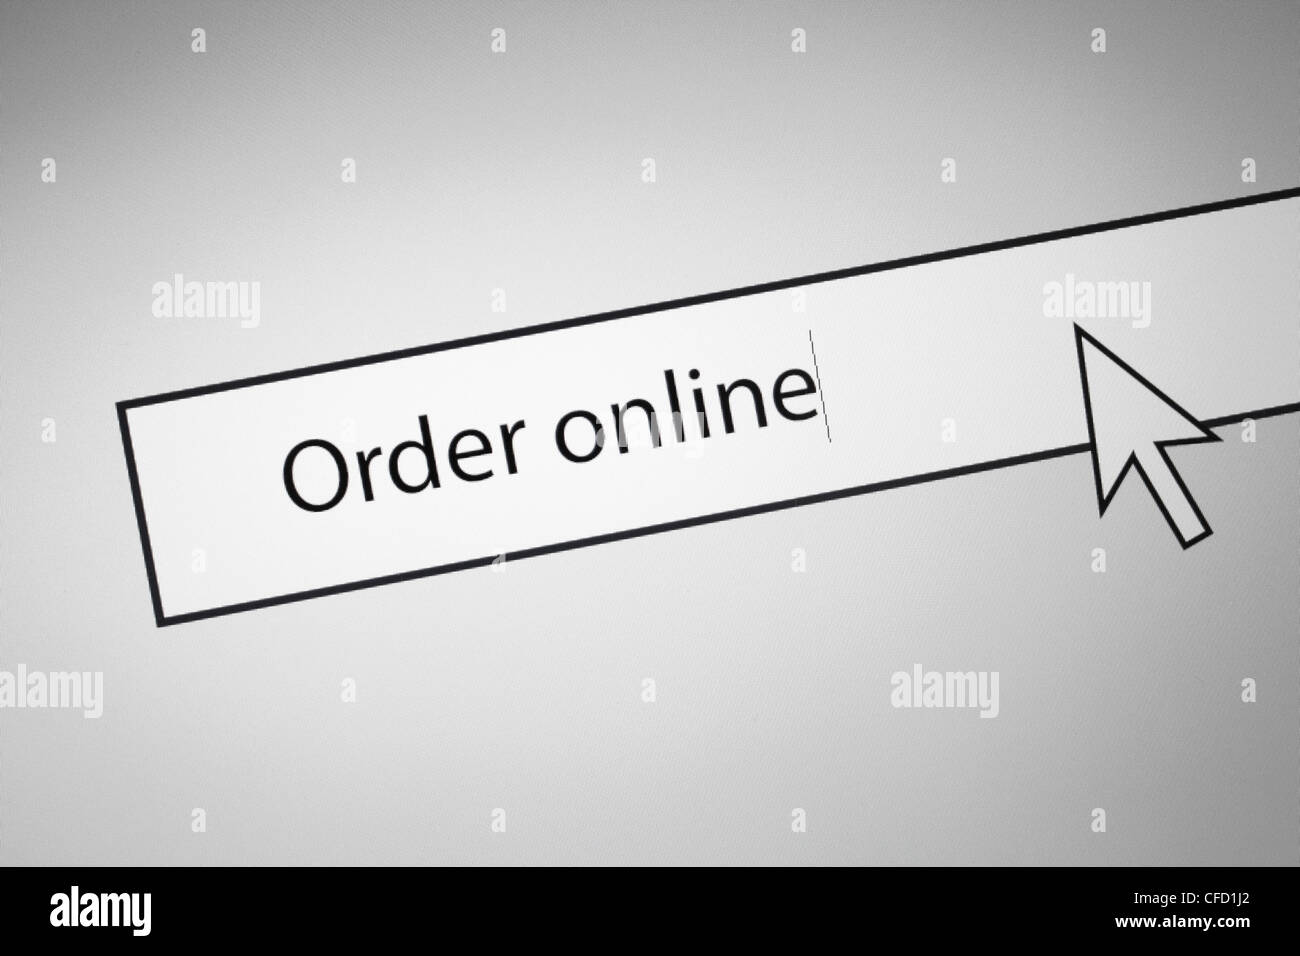 Order online Stock Photo